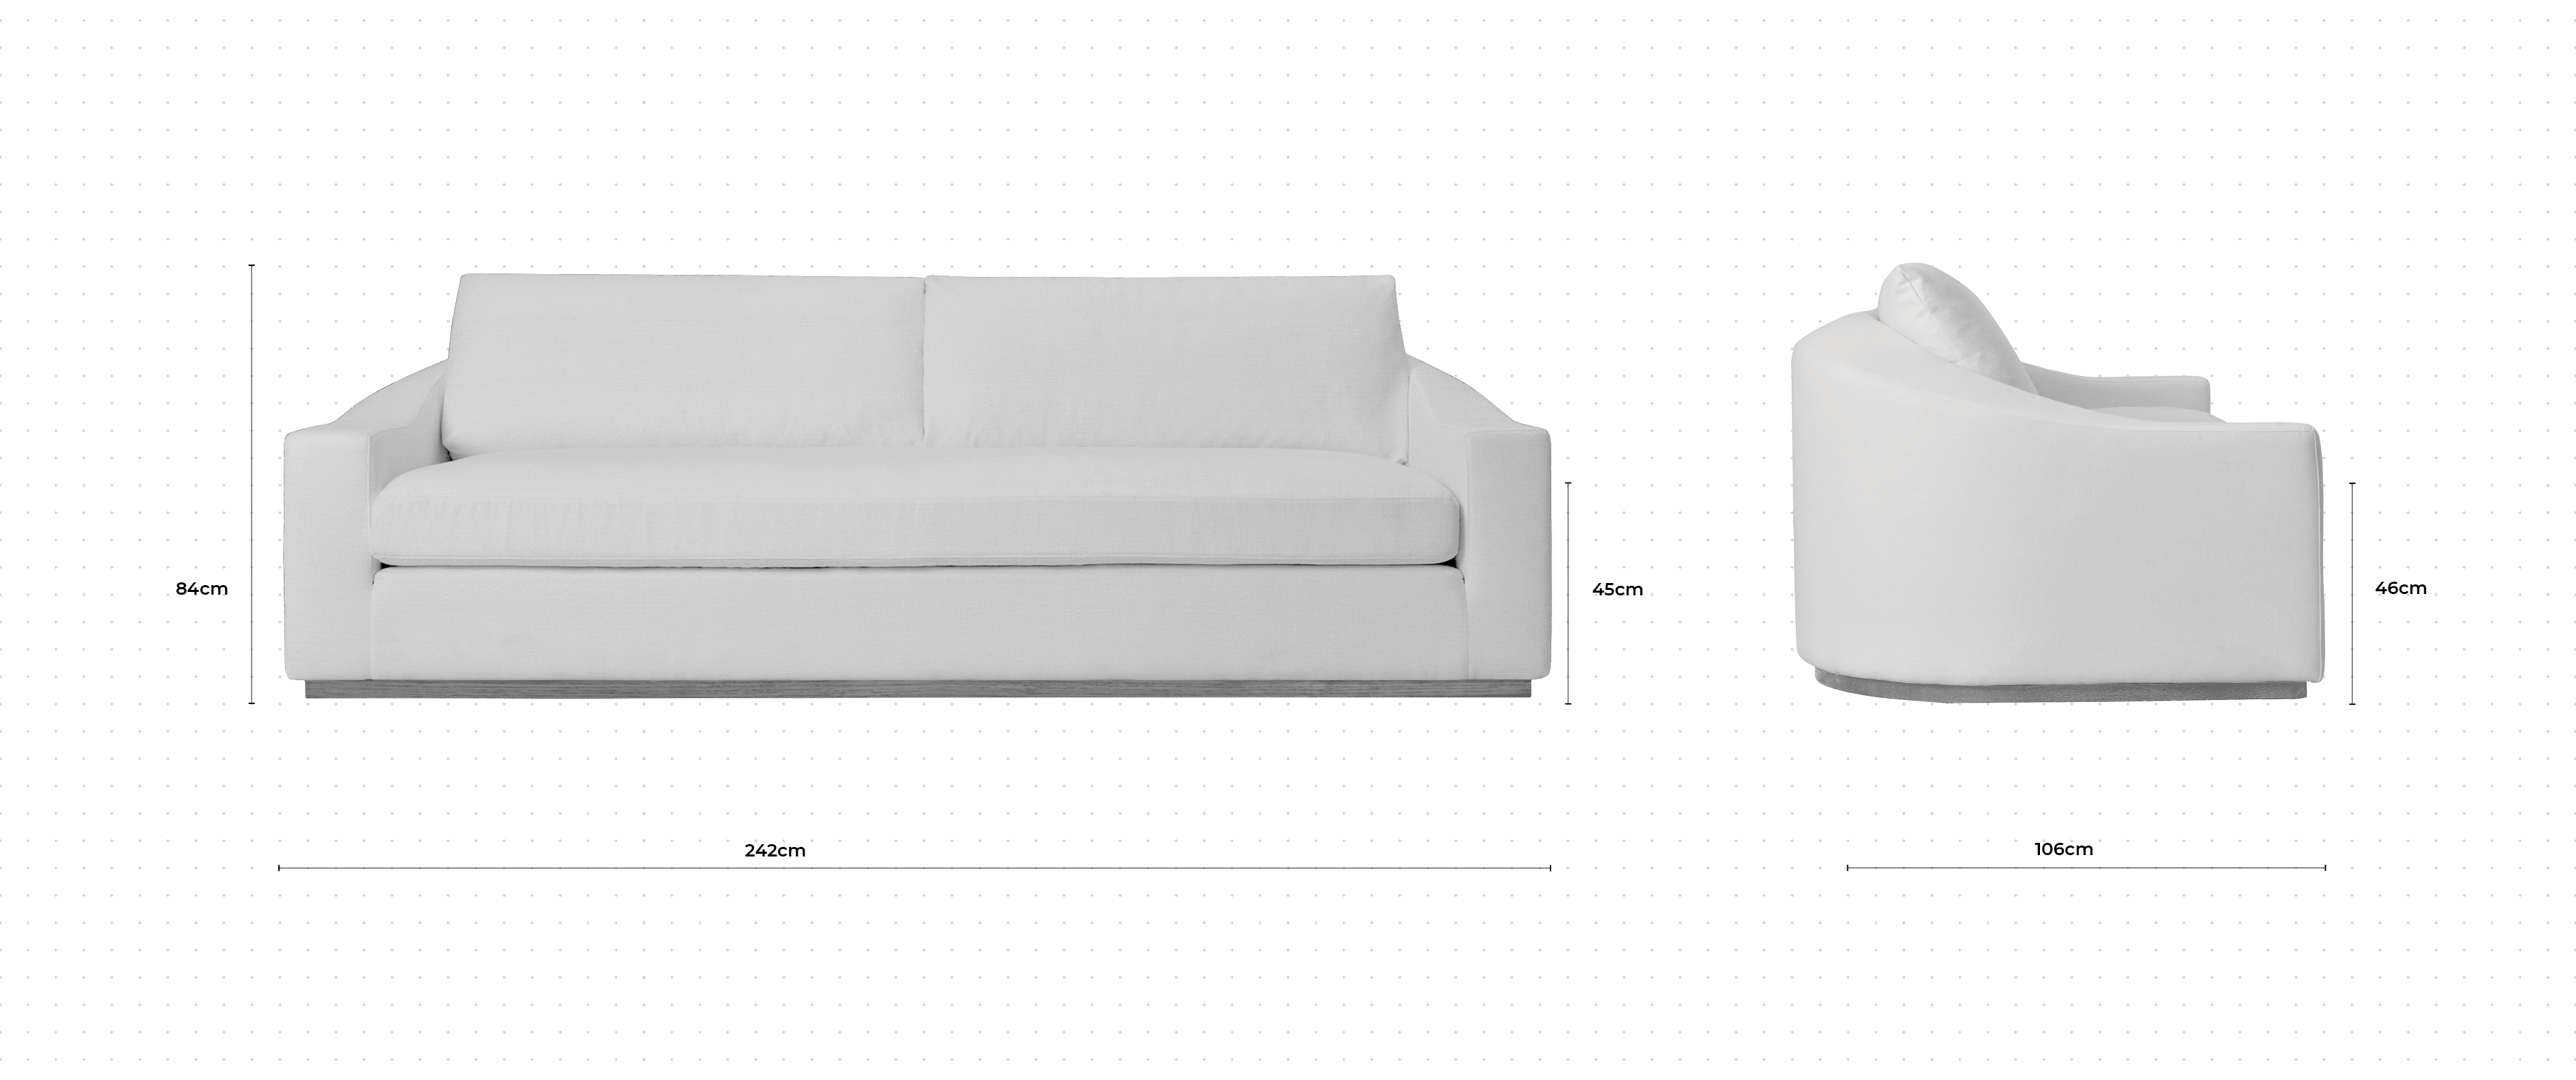 Ria 3 Seater Sofa dimensions